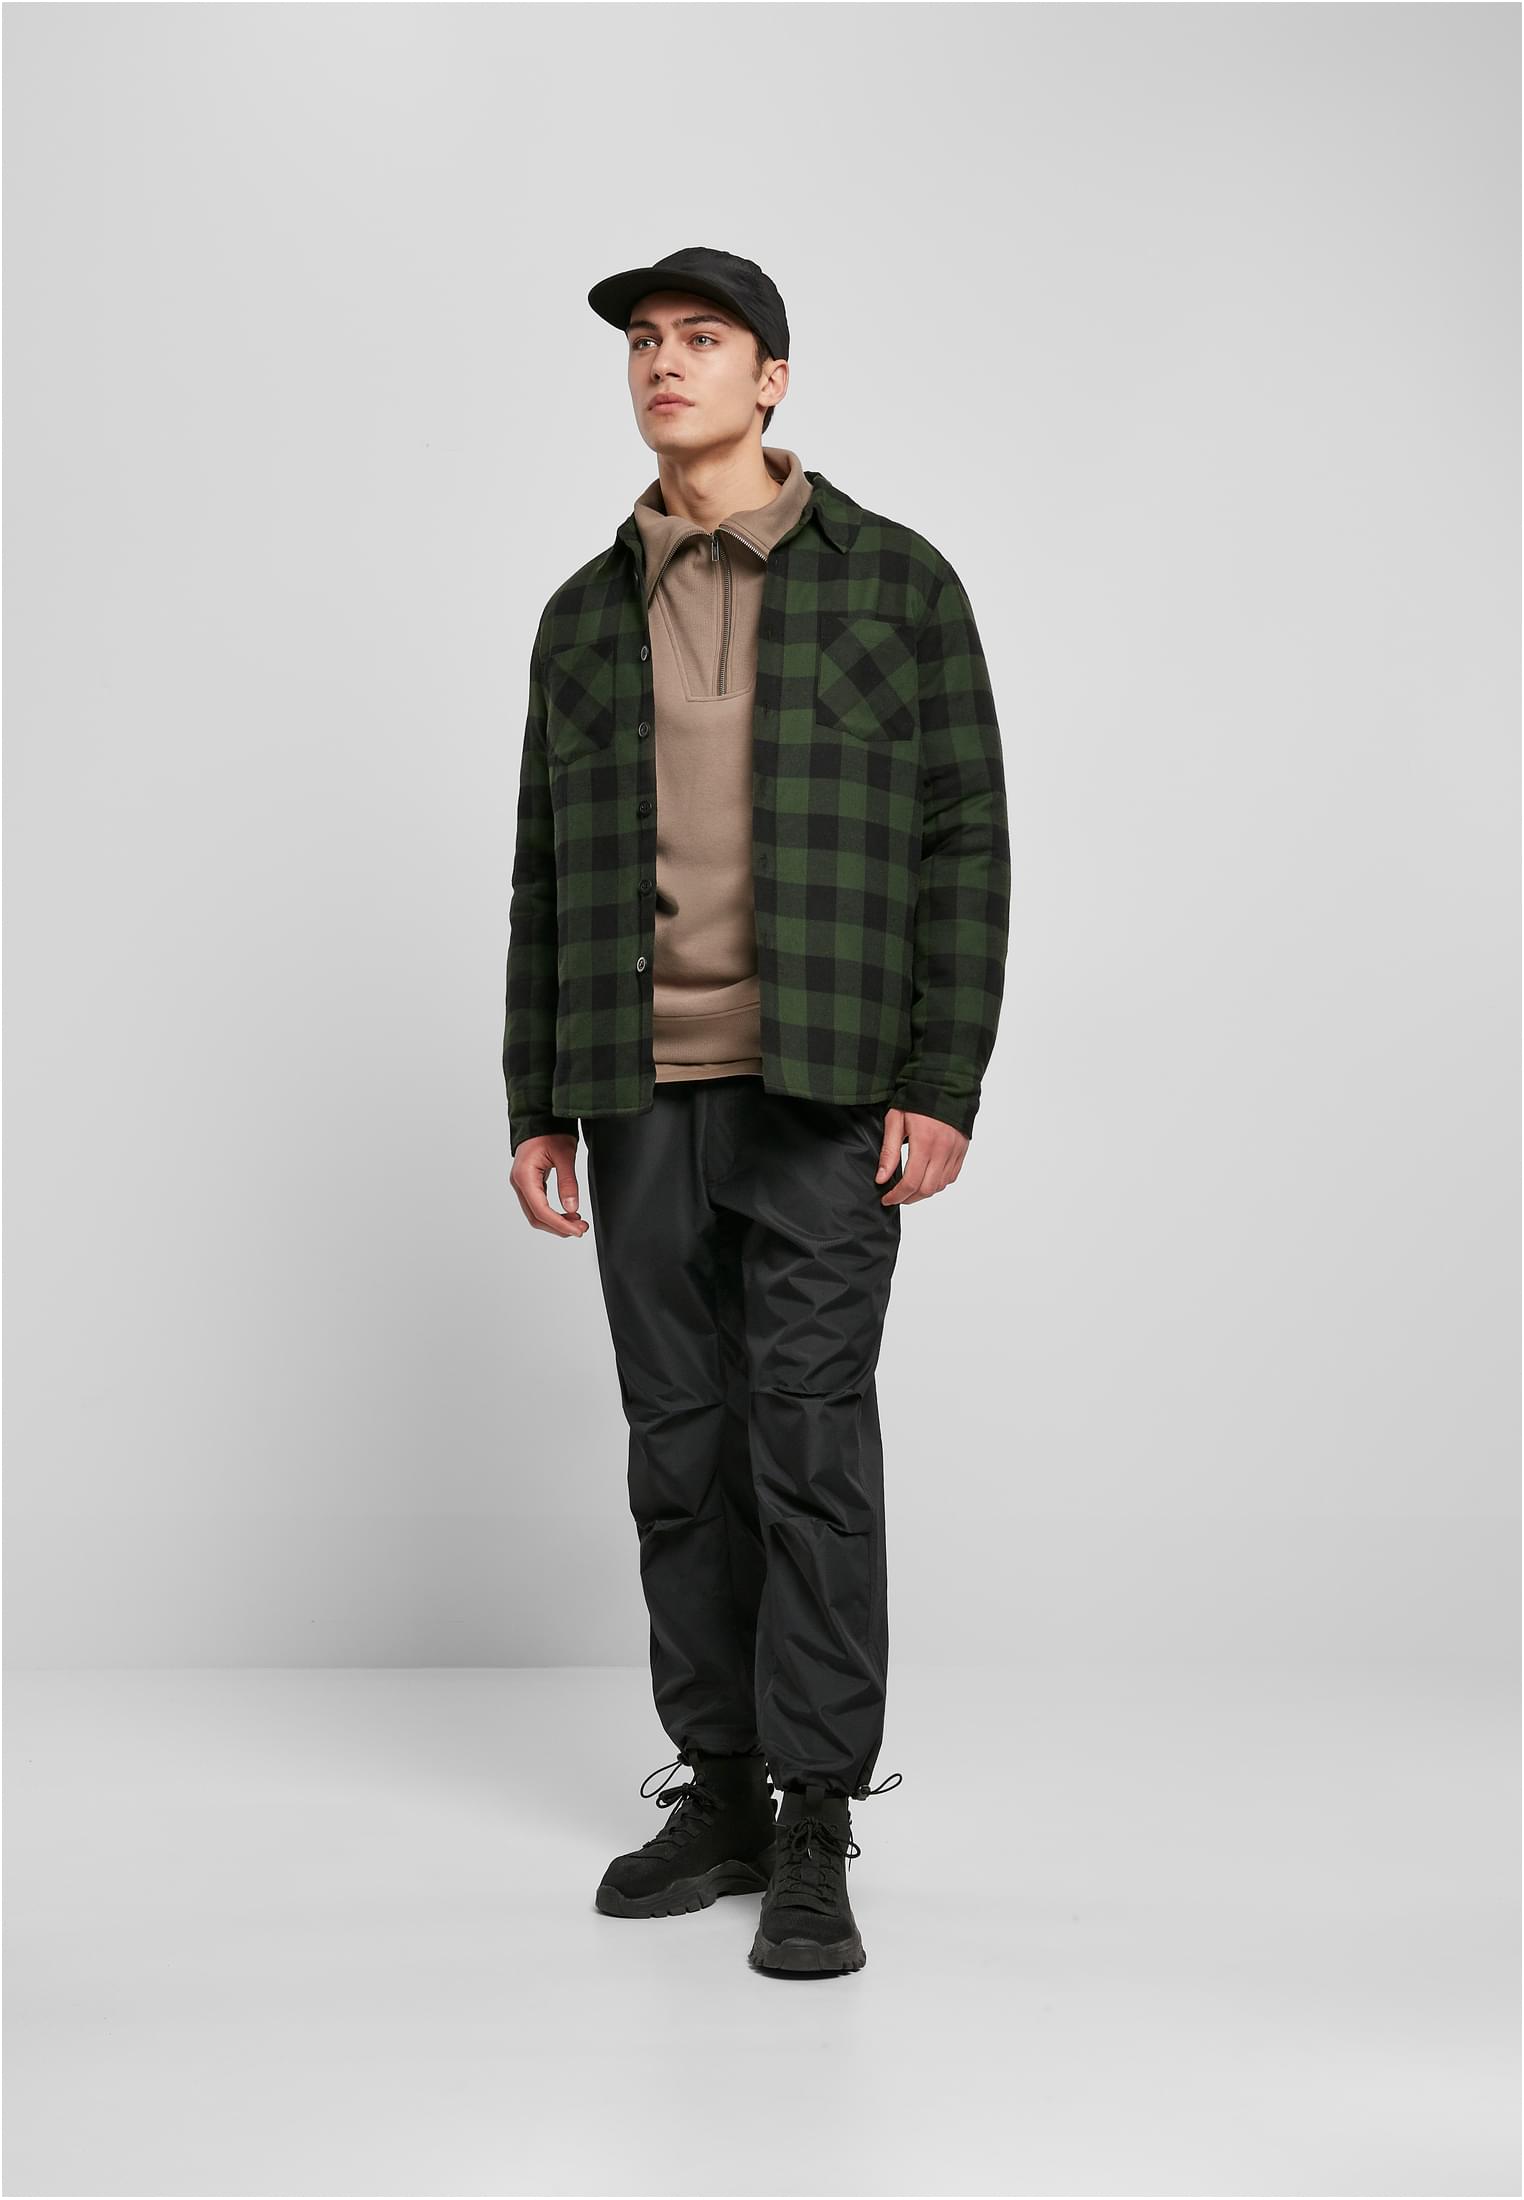 Hemden Padded Check Flannel Shirt in Farbe black/forest